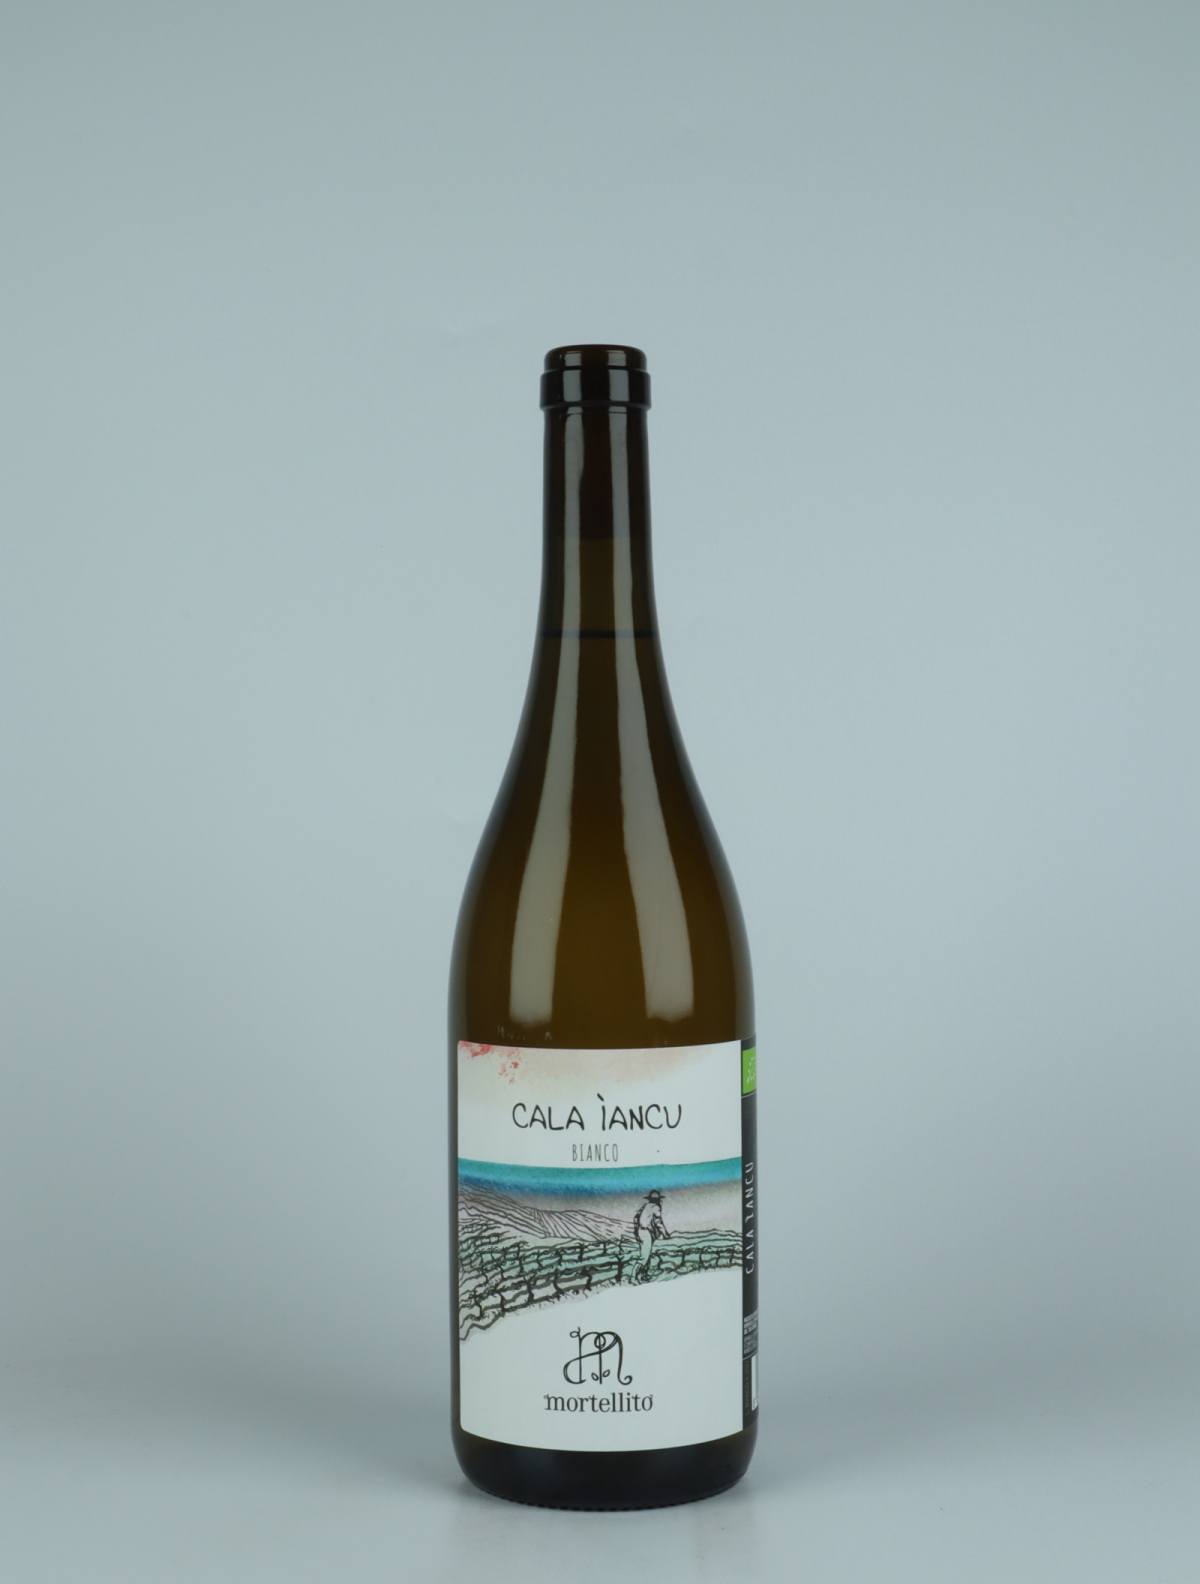 A bottle 2022 Cala Iancu - Bianco White wine from Il Mortellito, Sicily in Italy